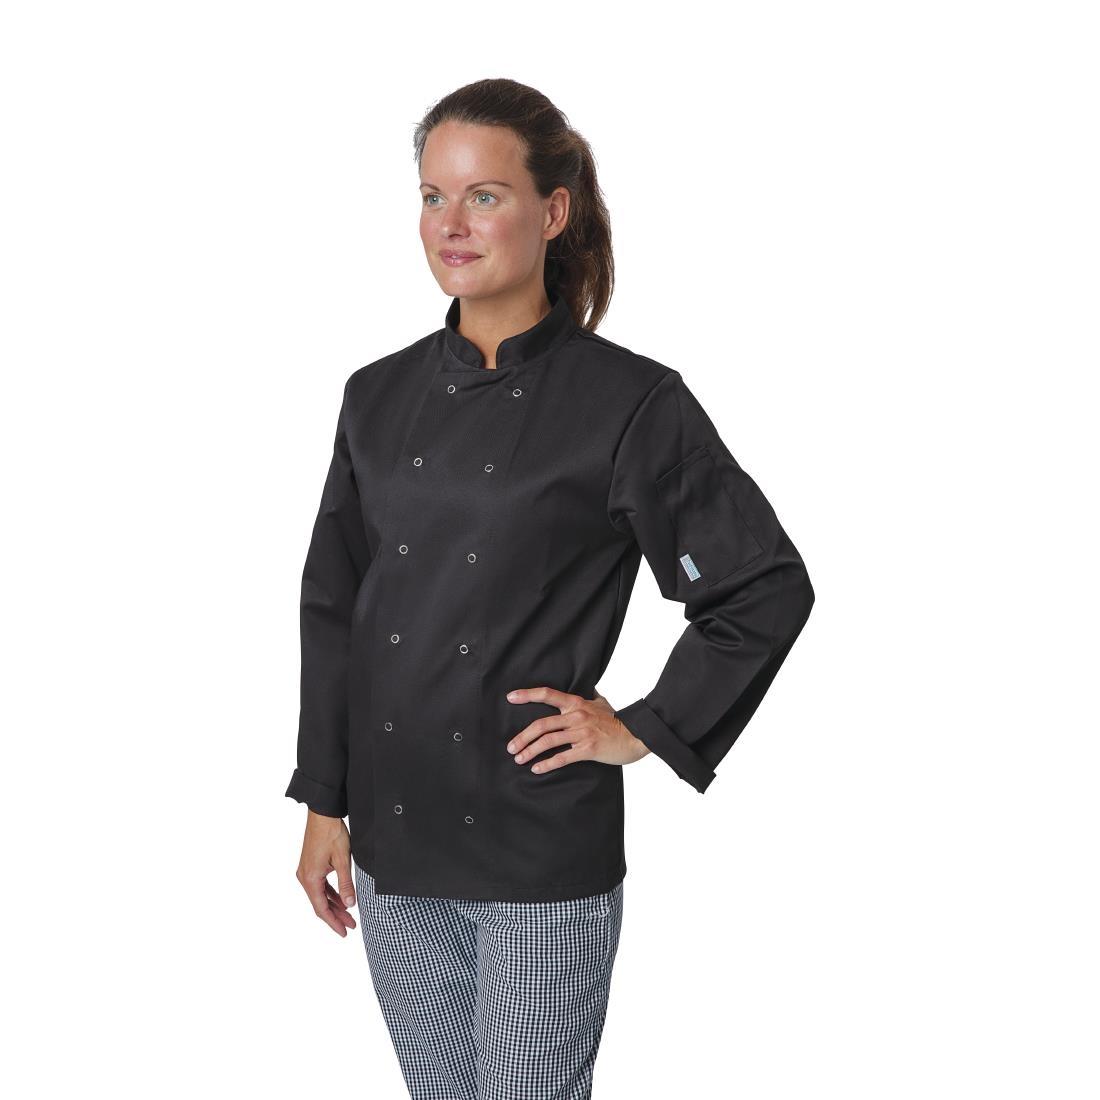 Whites Vegas Unisex Chefs Jacket Long Sleeve Black L - A438-L  - 2